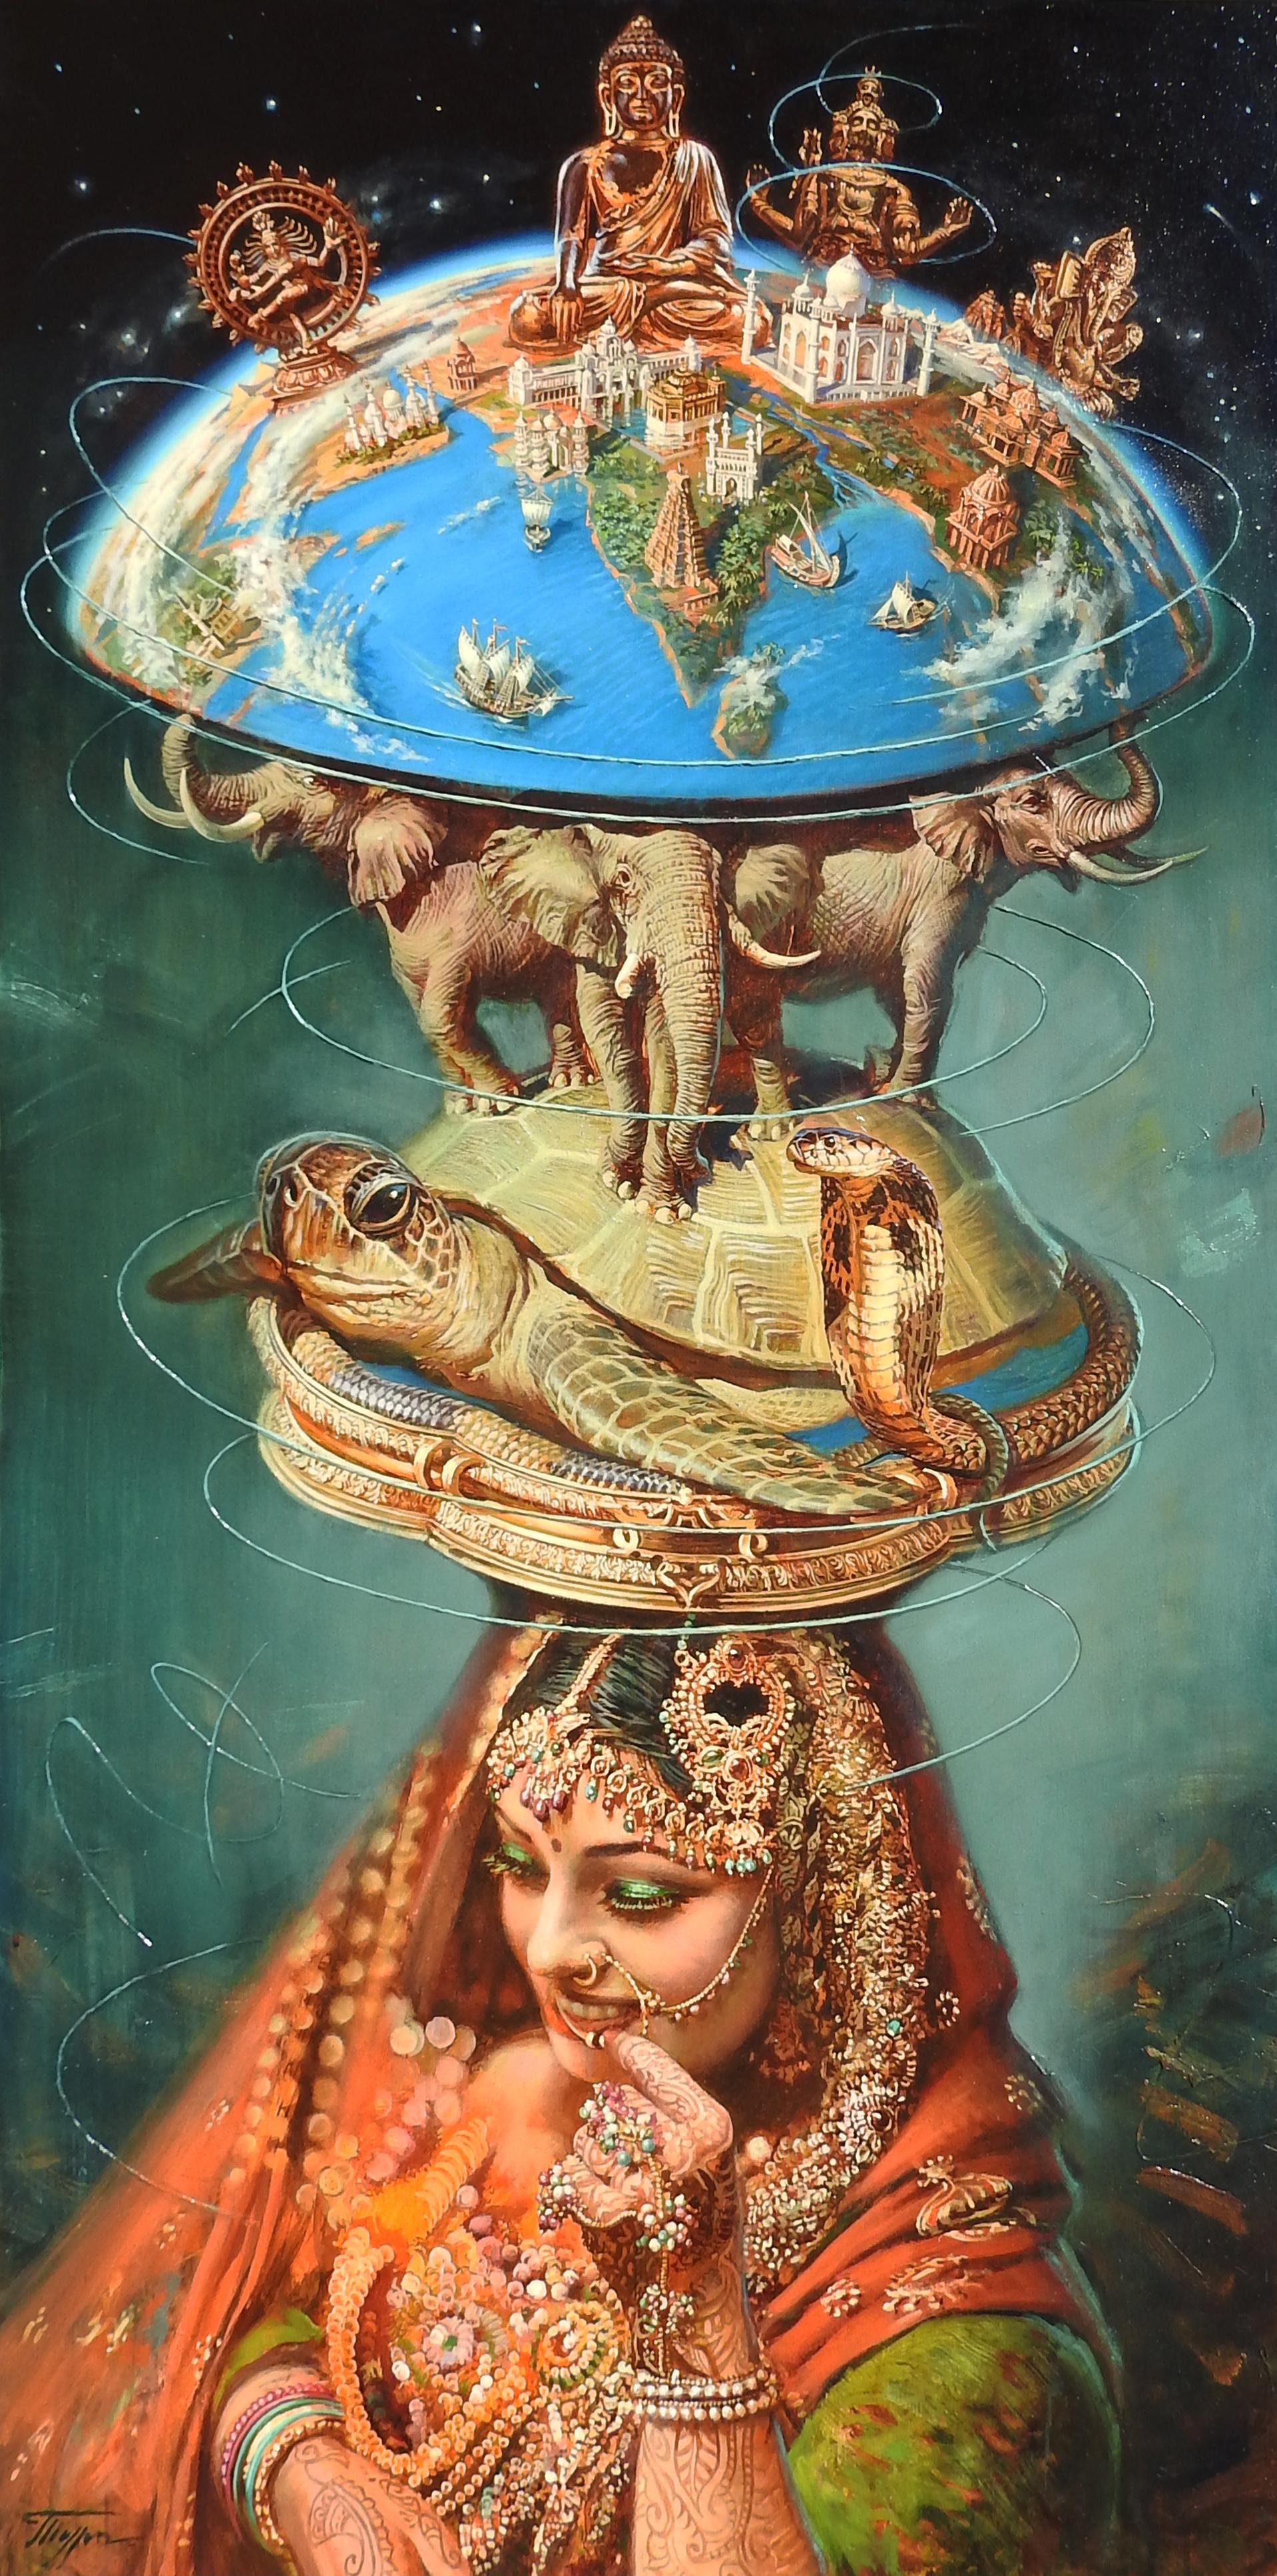 "India" (The Birth of the Universe), Oleg Turchin, Surrealism, Figurative, 58x30